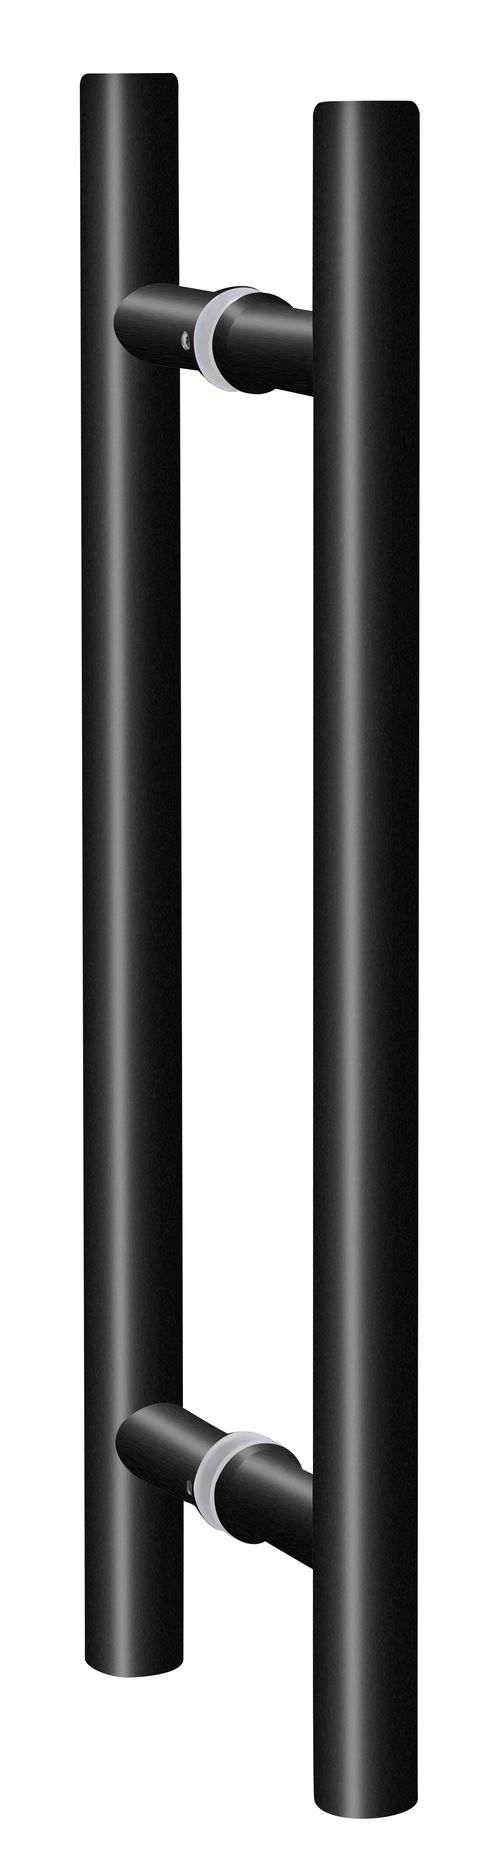 Puxador aço duplo p/pt preto 40cm Prostell Puxador aço duplo p/pt preto 40cm Prosteel